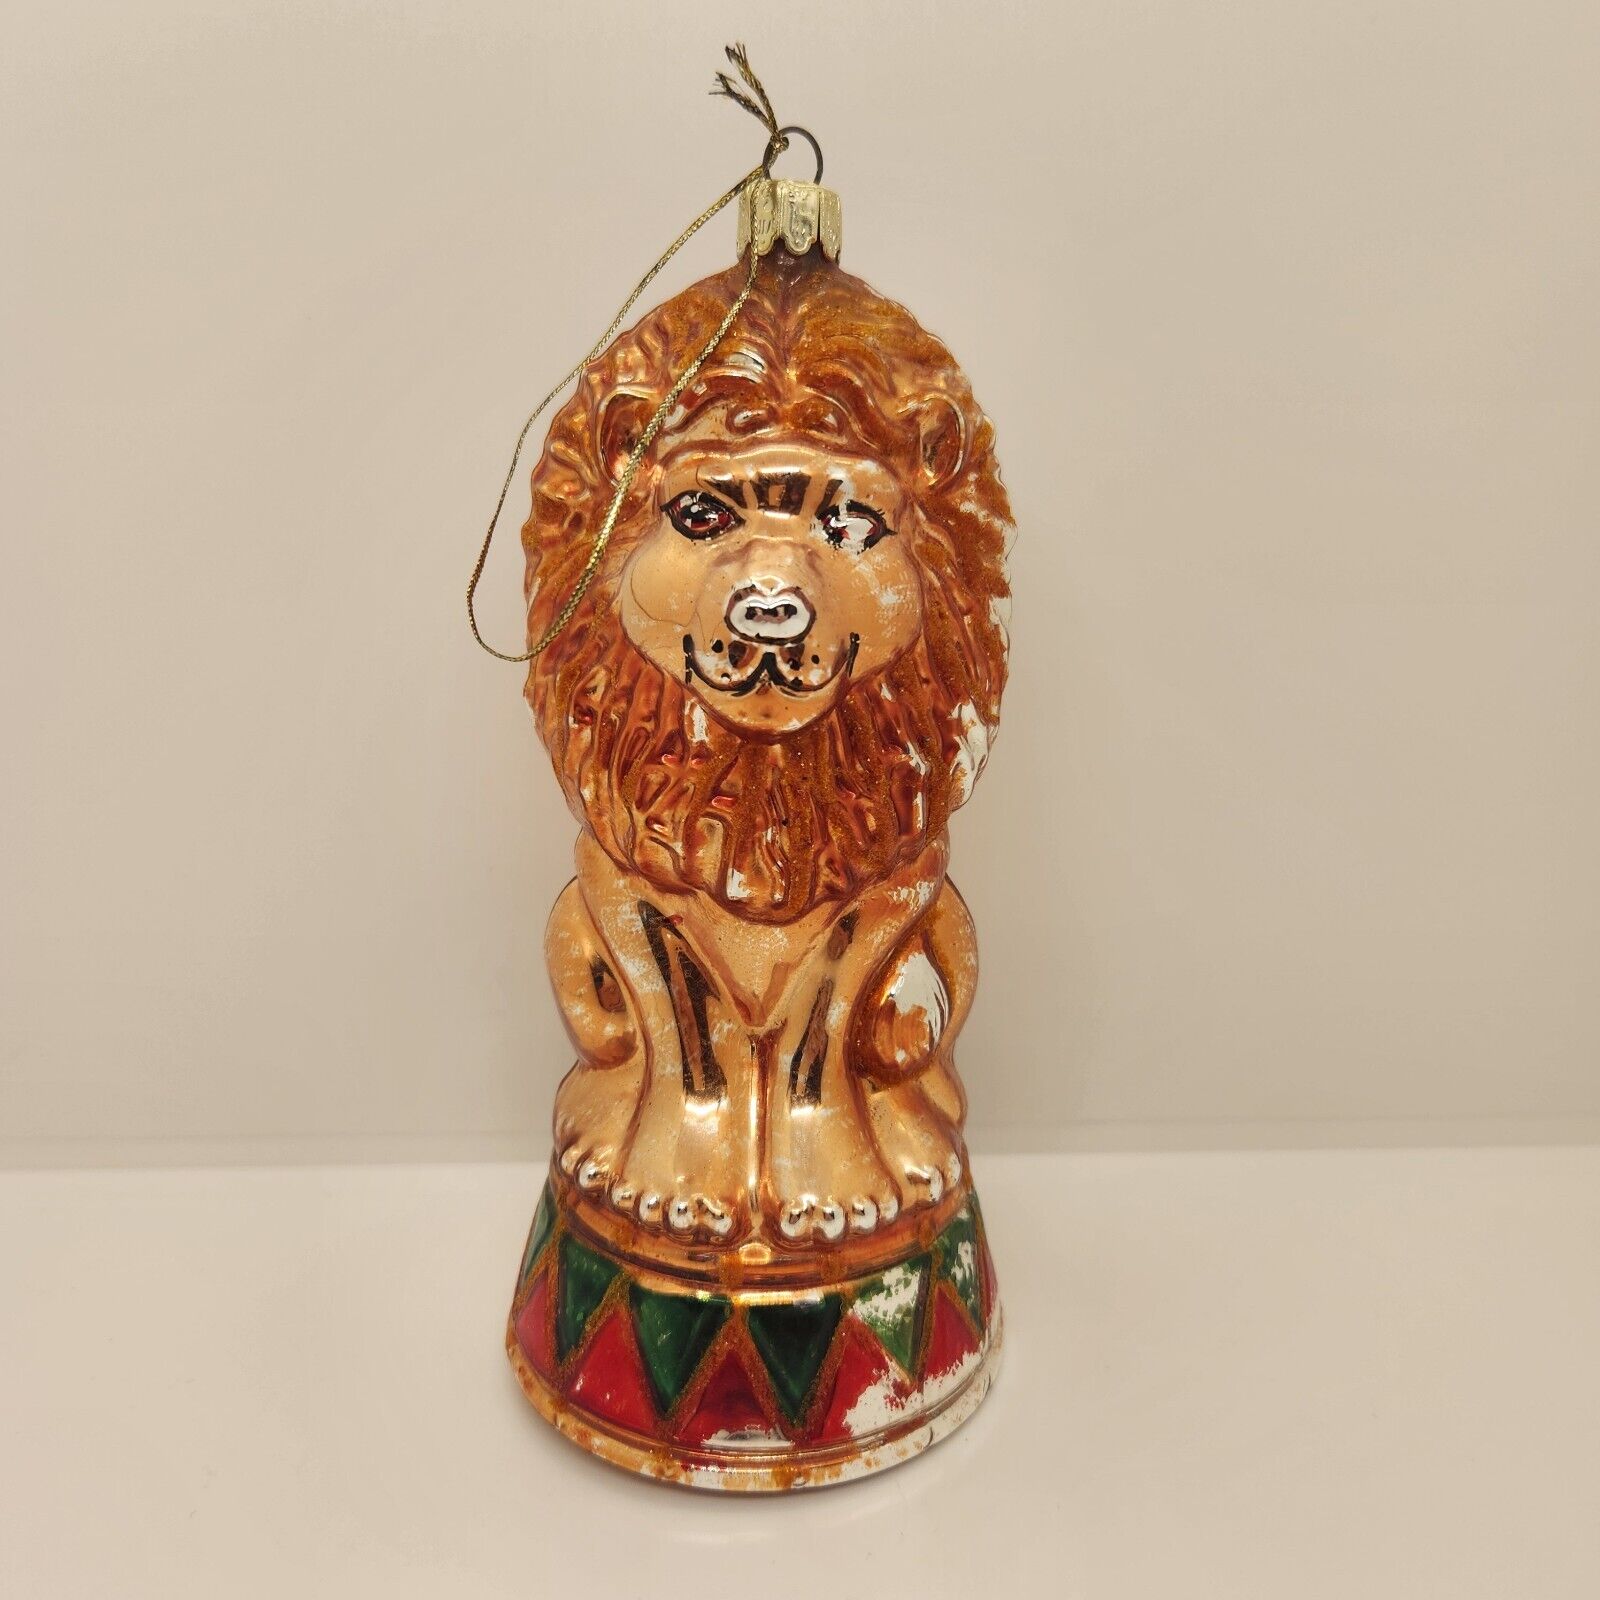 Huge Circus Lion Blown Glass Christmas Ornament